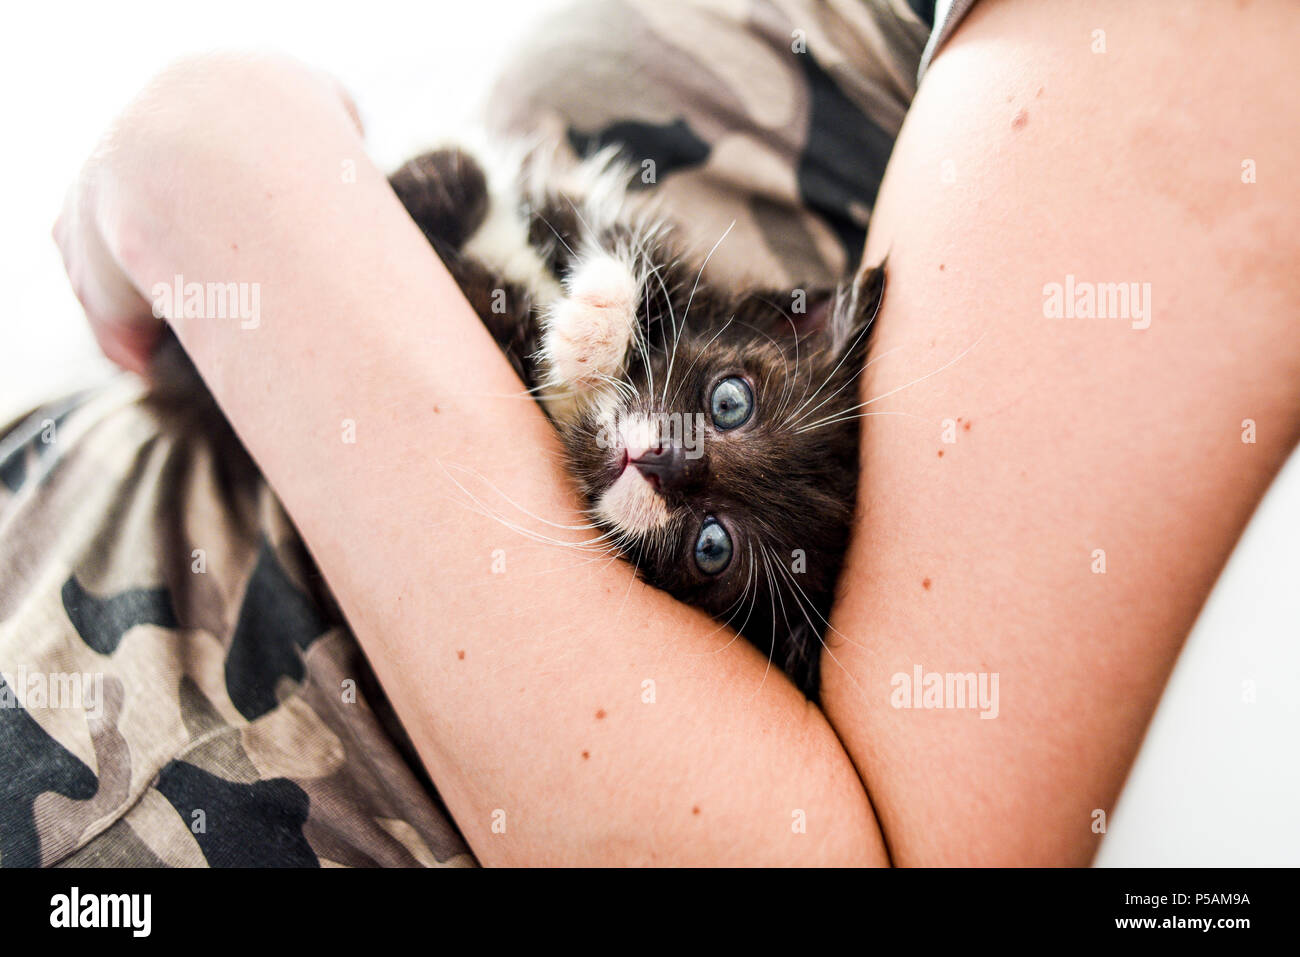 Little sweet black kitty on human hands. Stock Photo